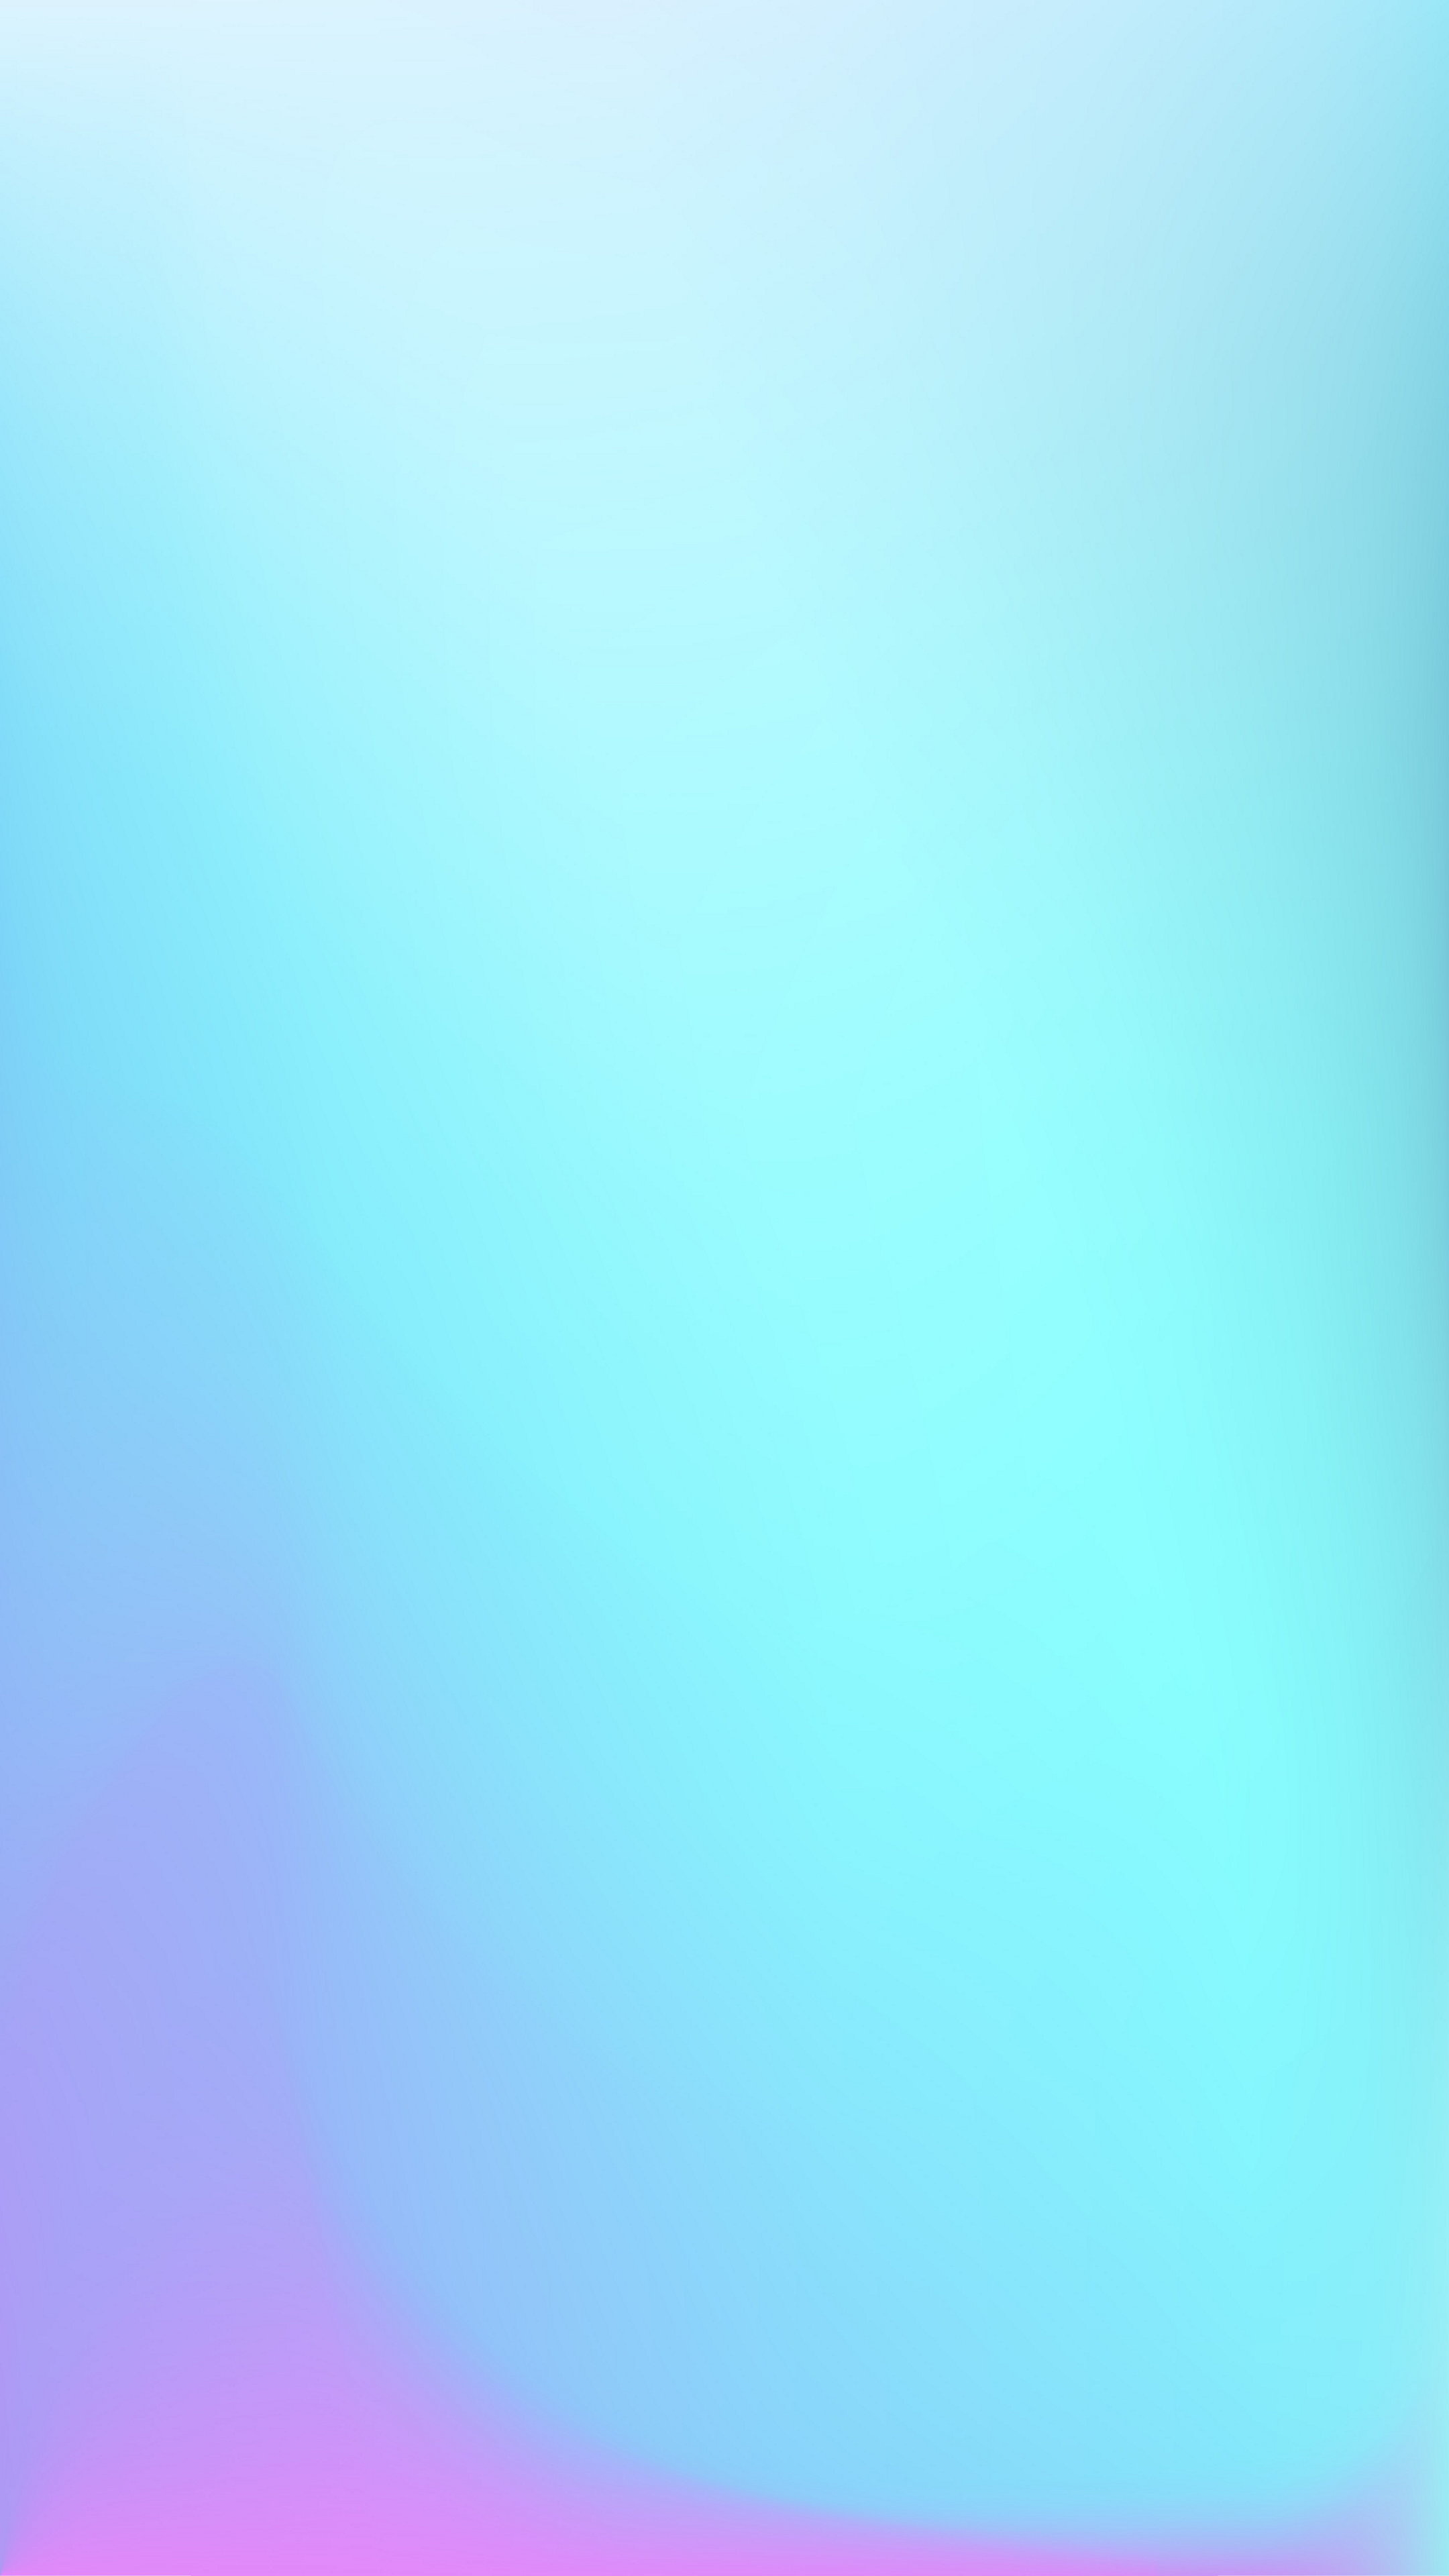 Columbia blue gradient wallpaper, Pale blue shades, Smooth transition, Subtle elegance, 2160x3840 4K Phone